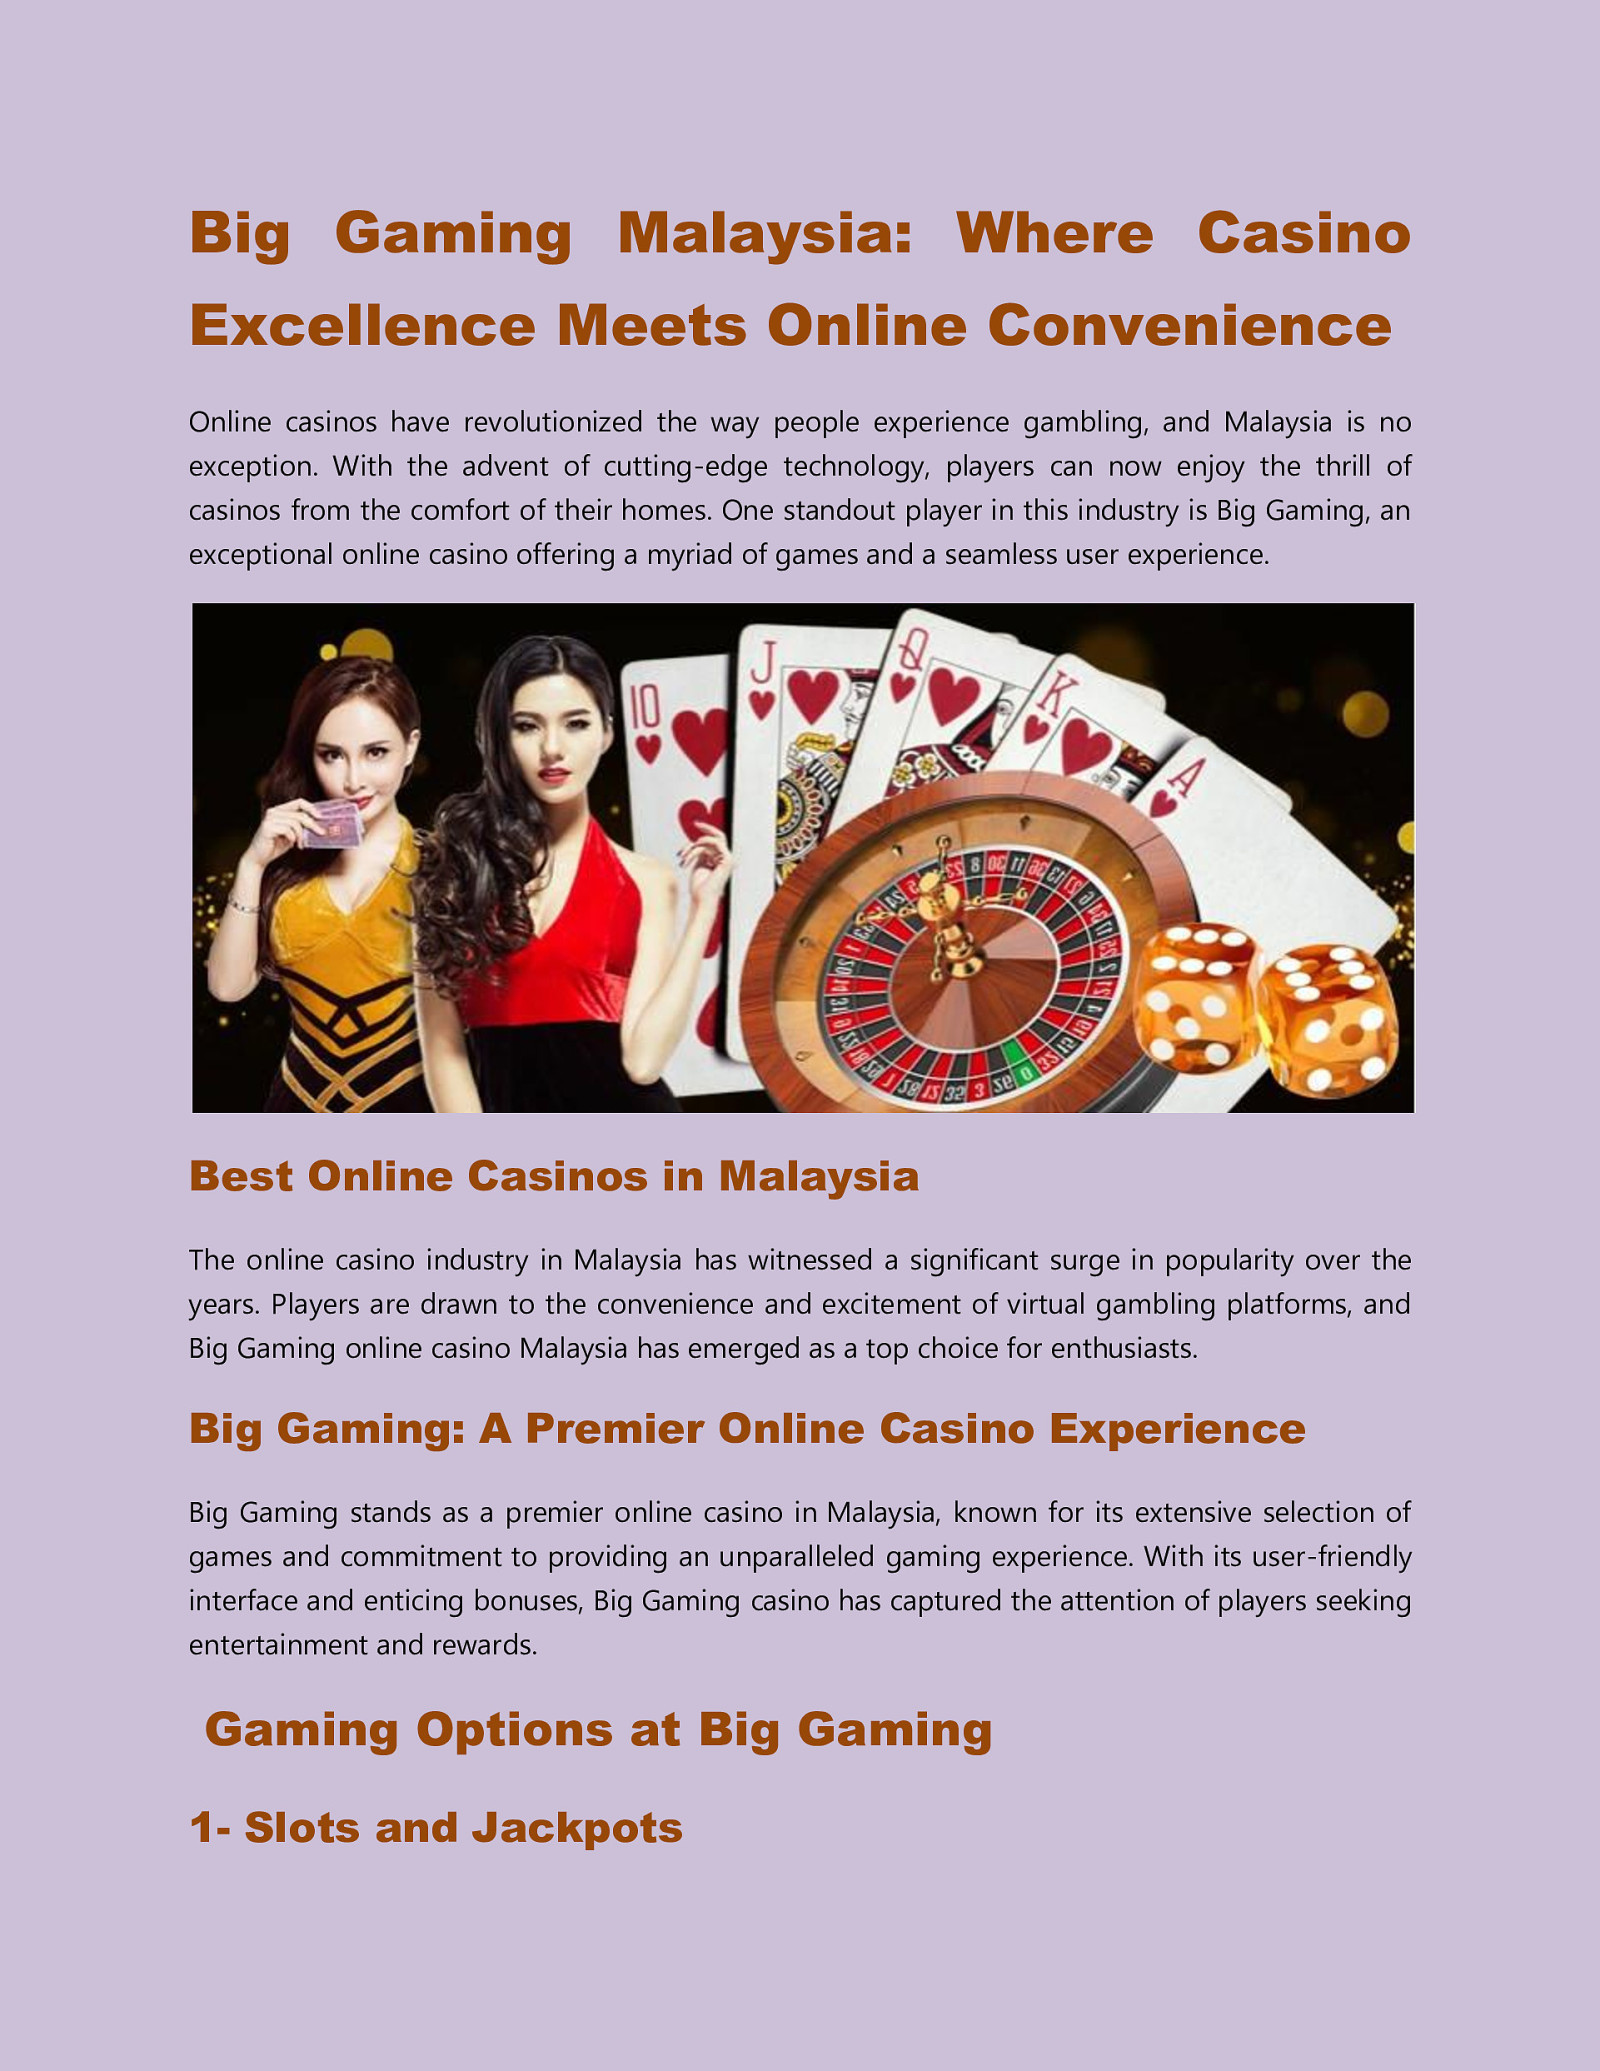 Free Credit New Register Online Casino Malaysia